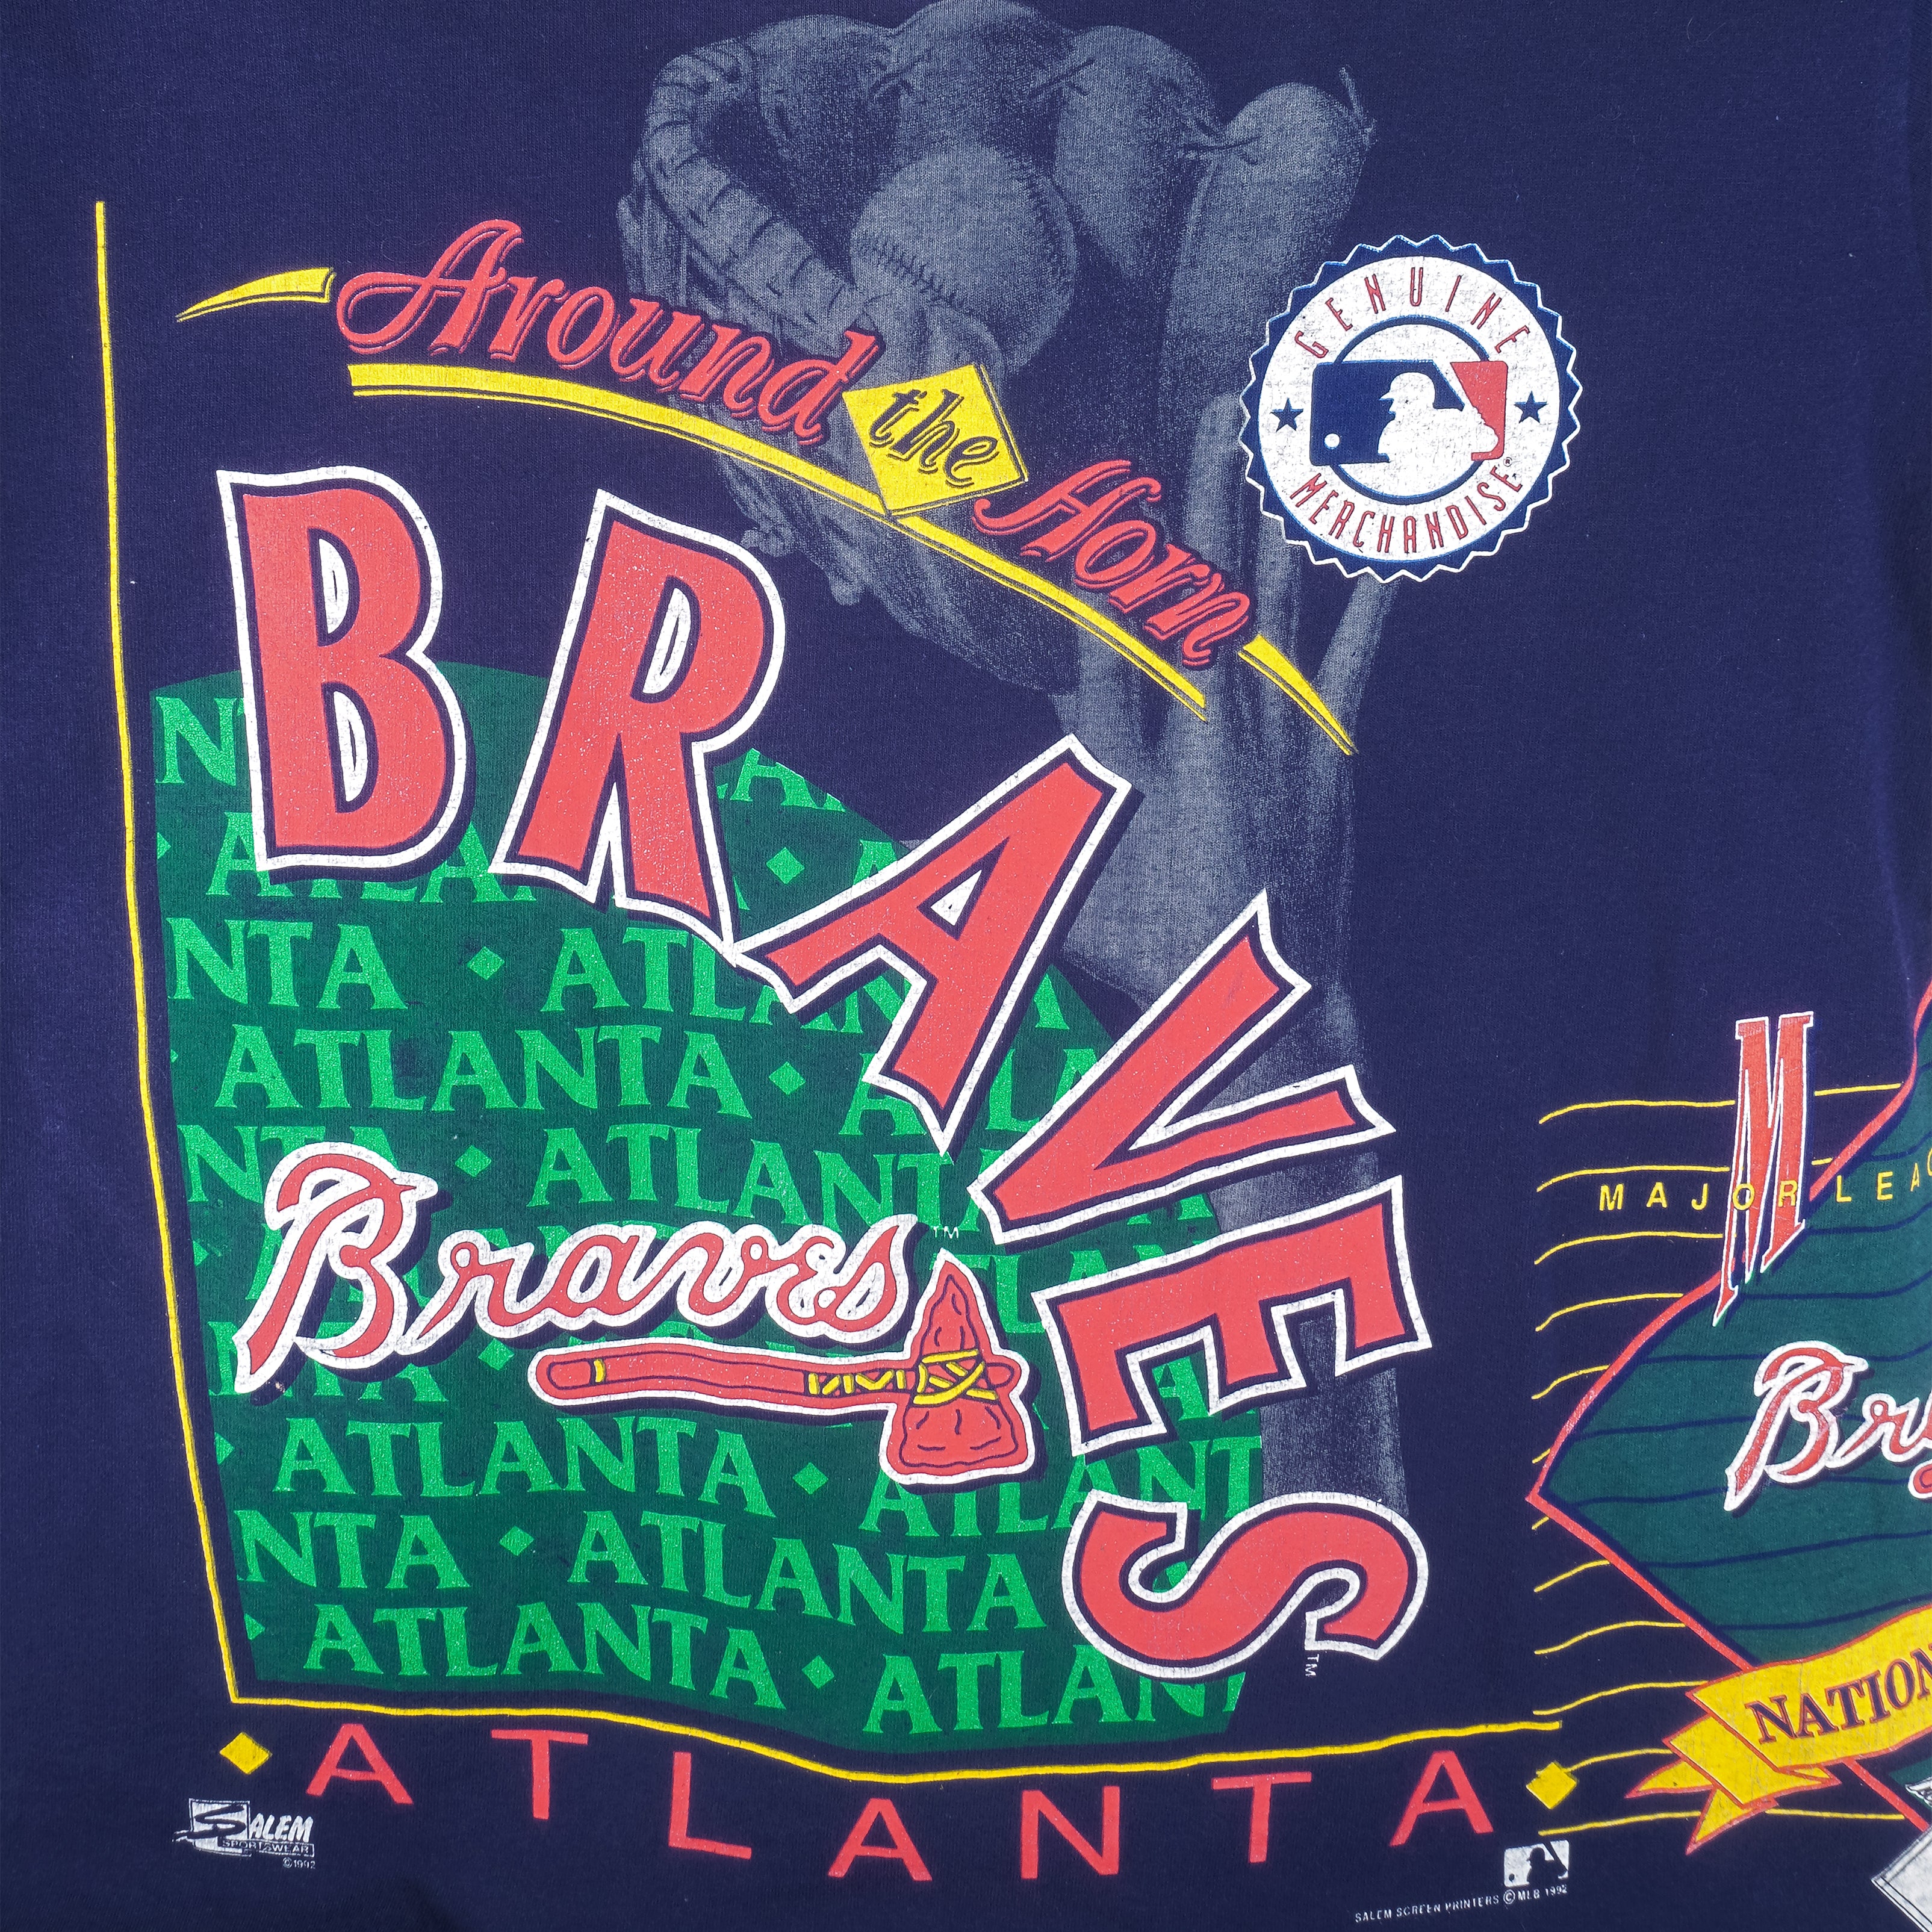 Vintage Atlanta Braves T-Shirt Large